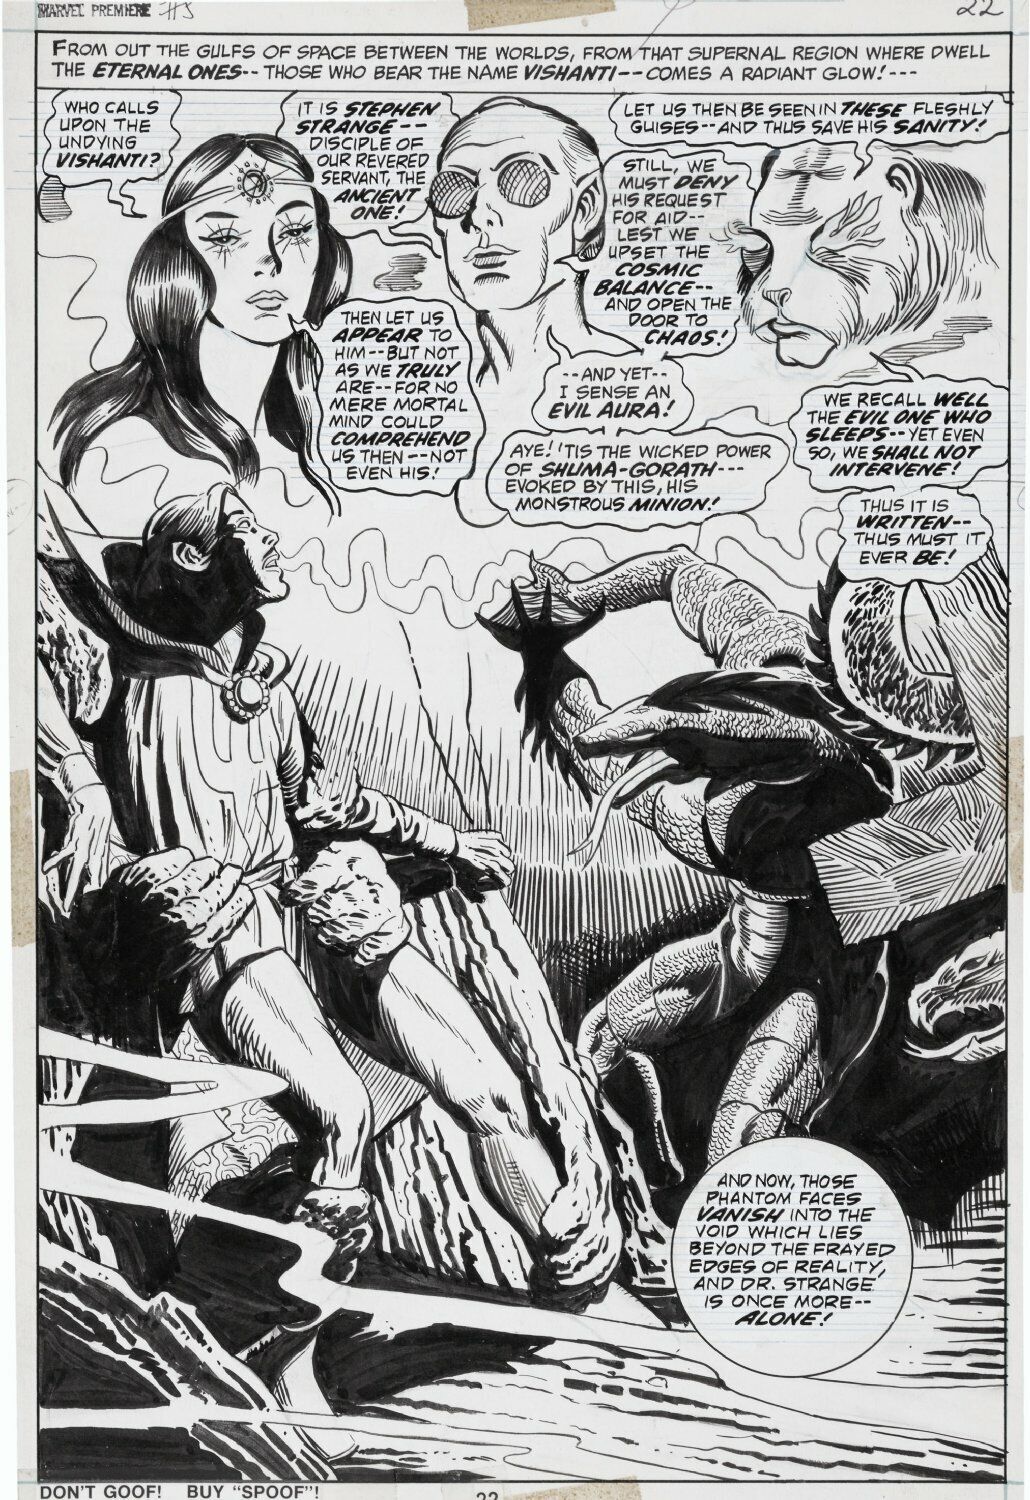 SAM KWESKIN / DON PERLIN - Marvel Premiere #5 splash, Dr Strange cosmic call '72